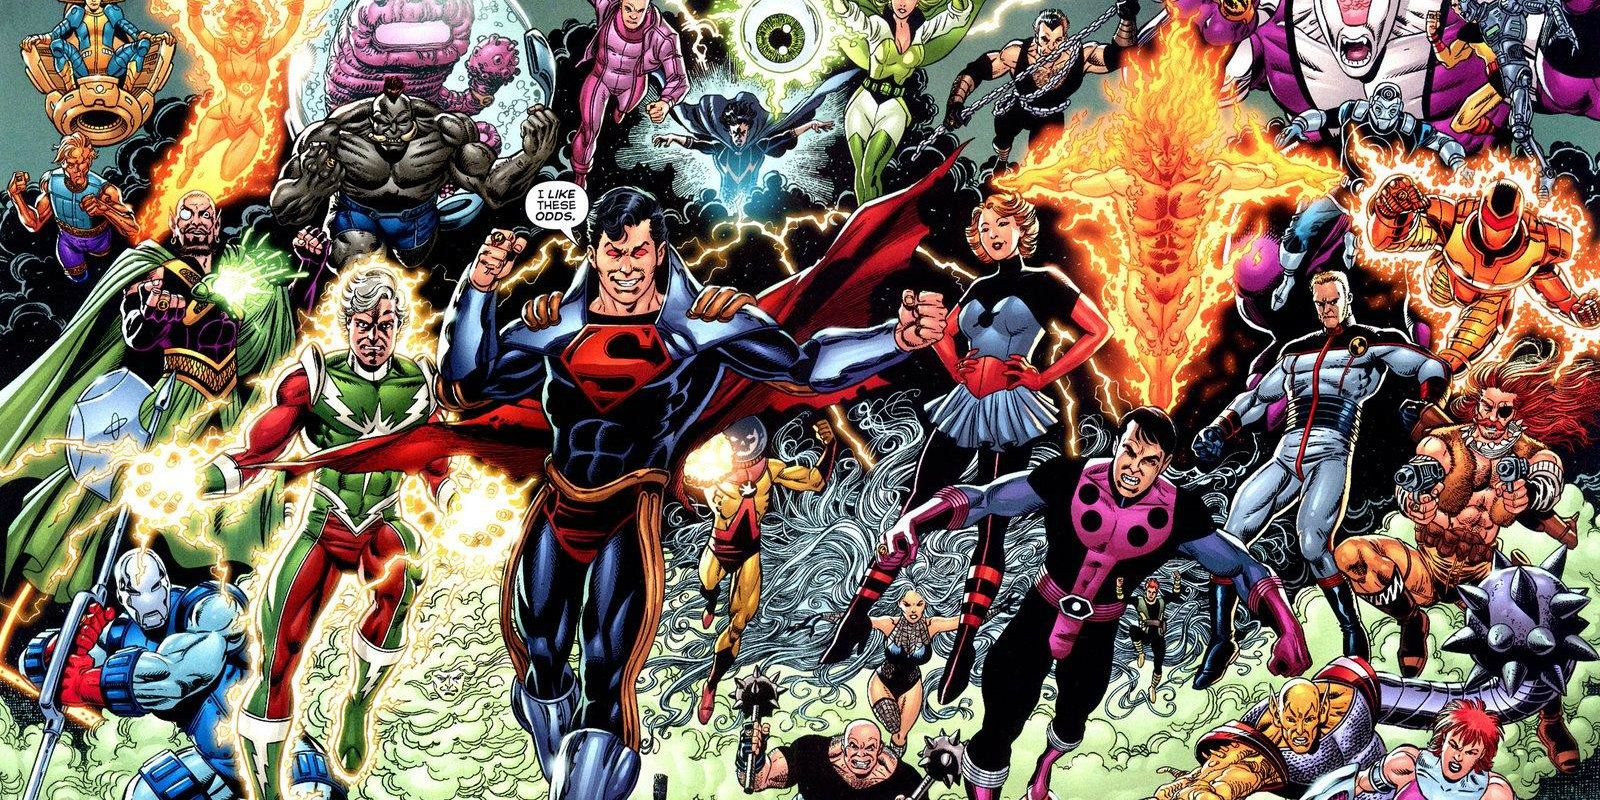 Superboy-Prime leads the new Legion of Super-Villains